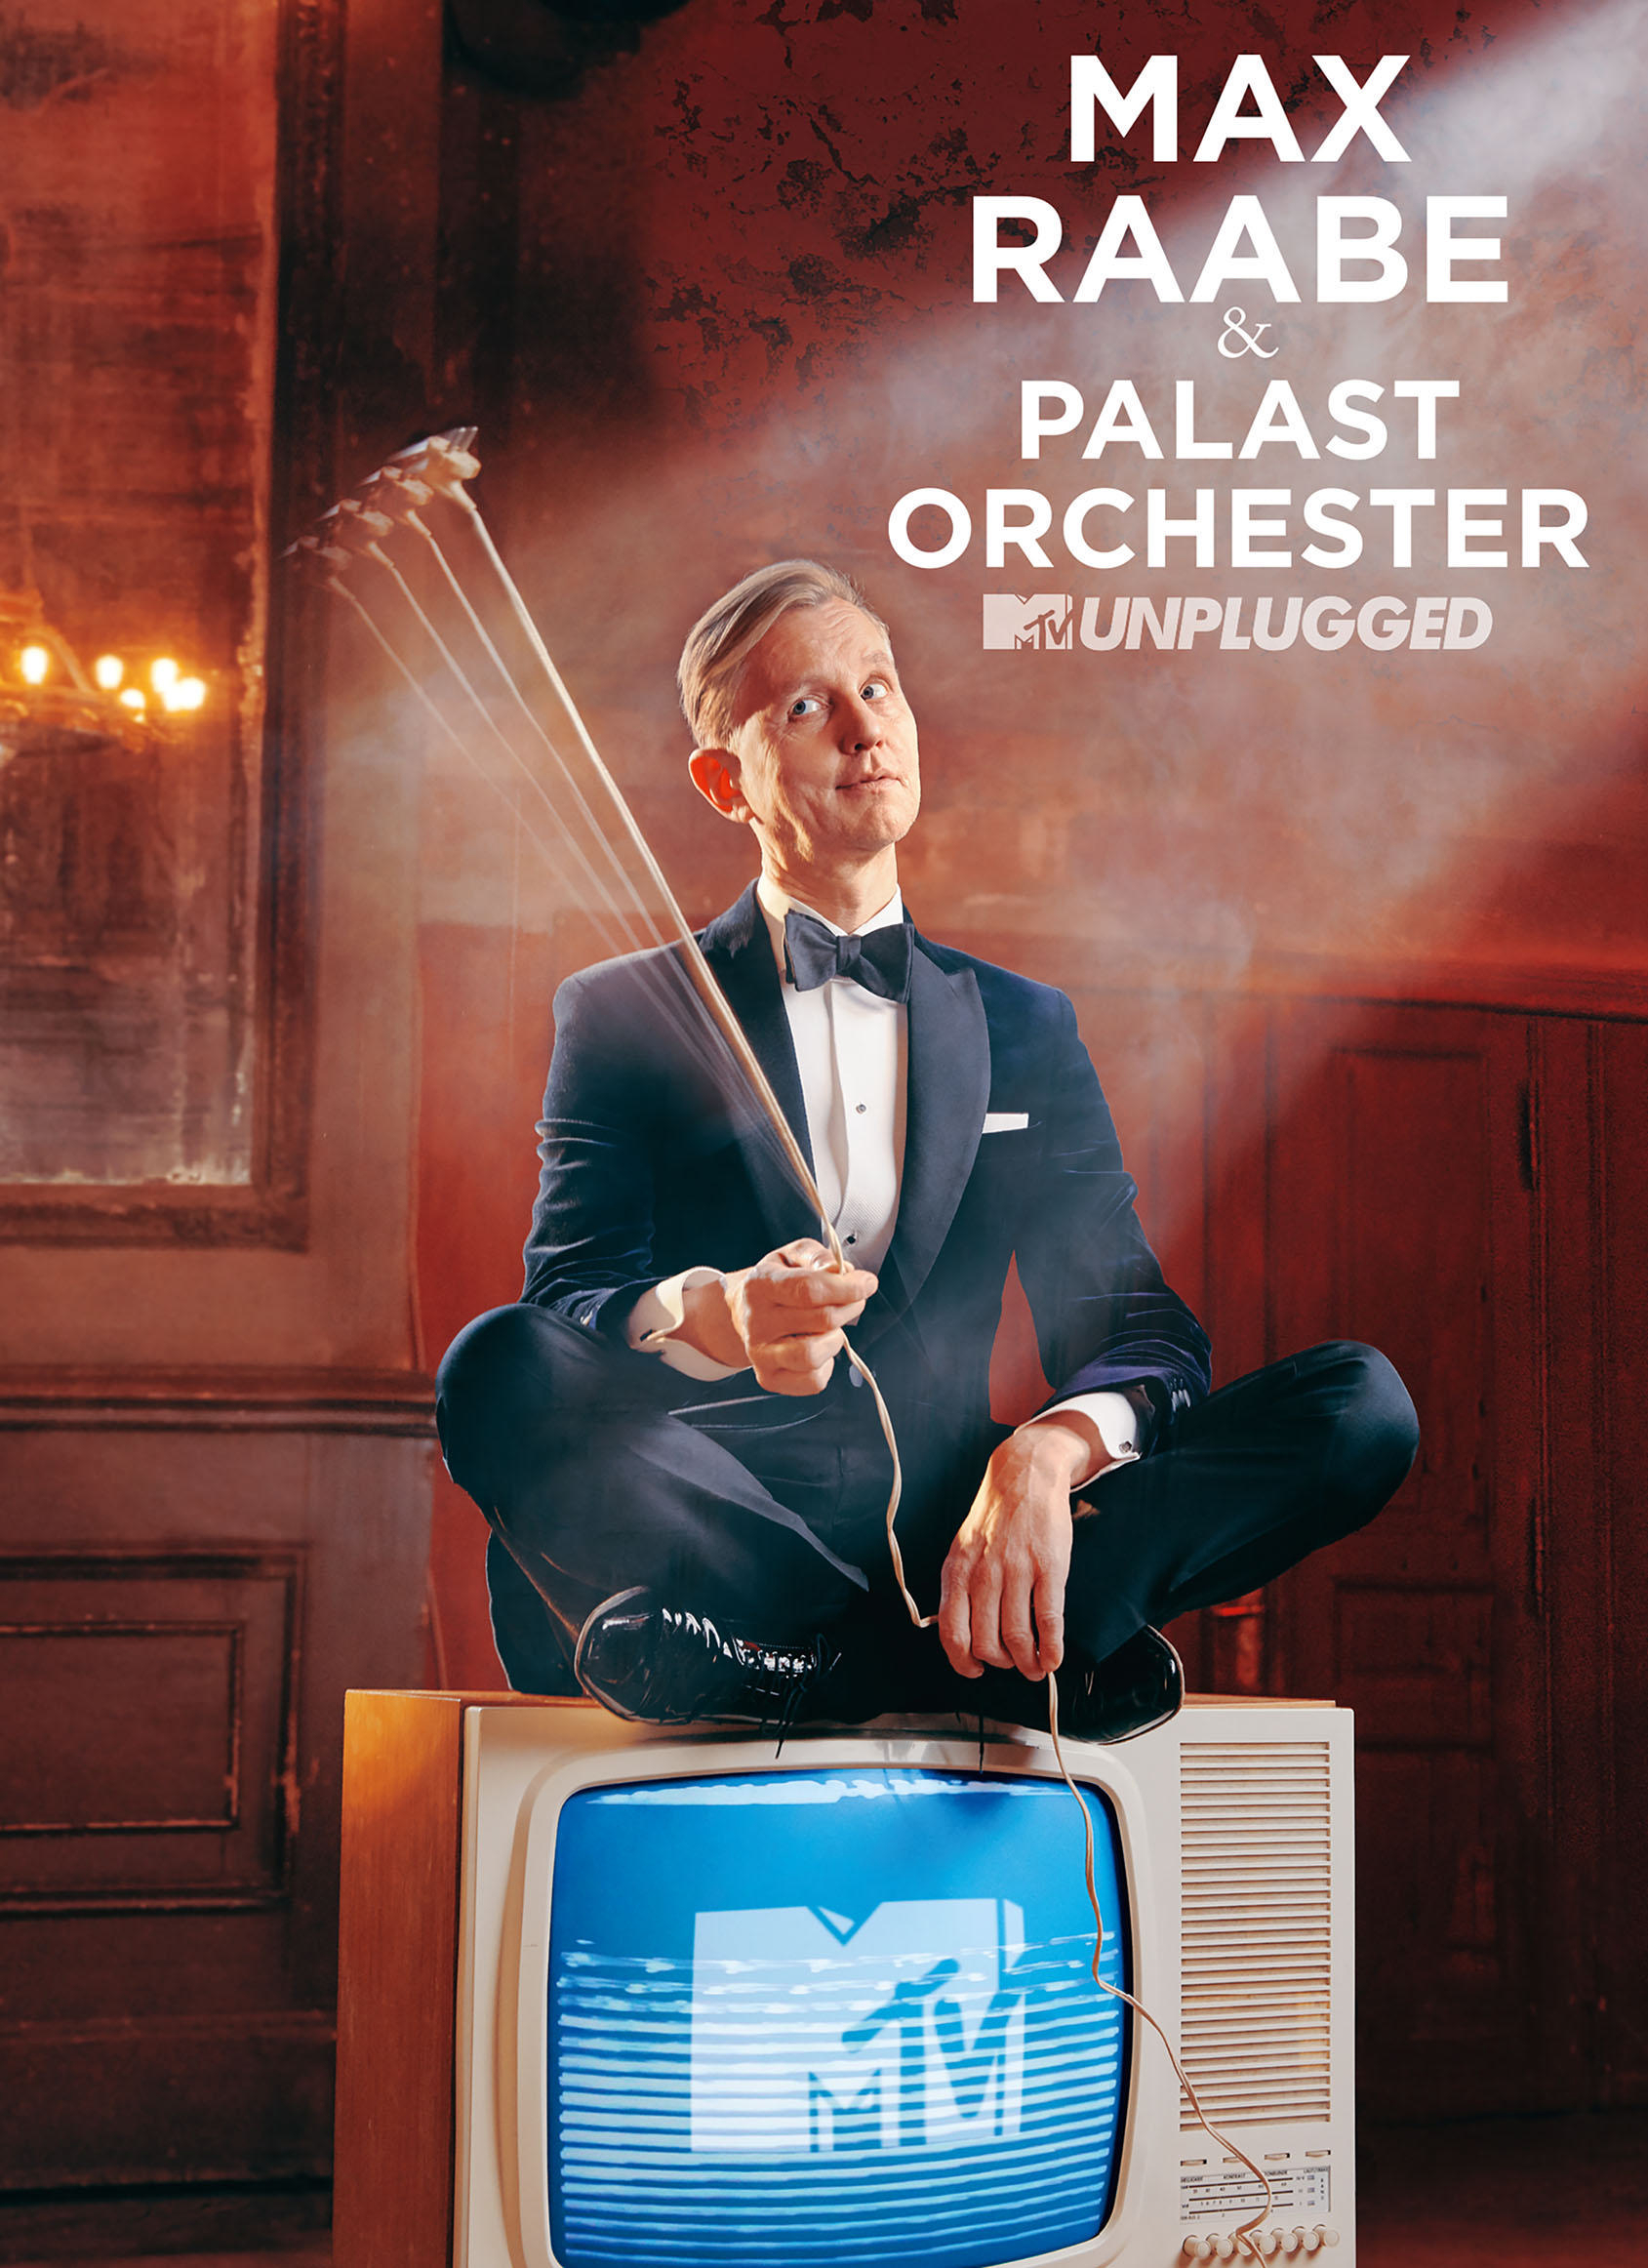 Palast Orchester & Max Raabe Raabe (DVD) - - Unplugged MTV Max